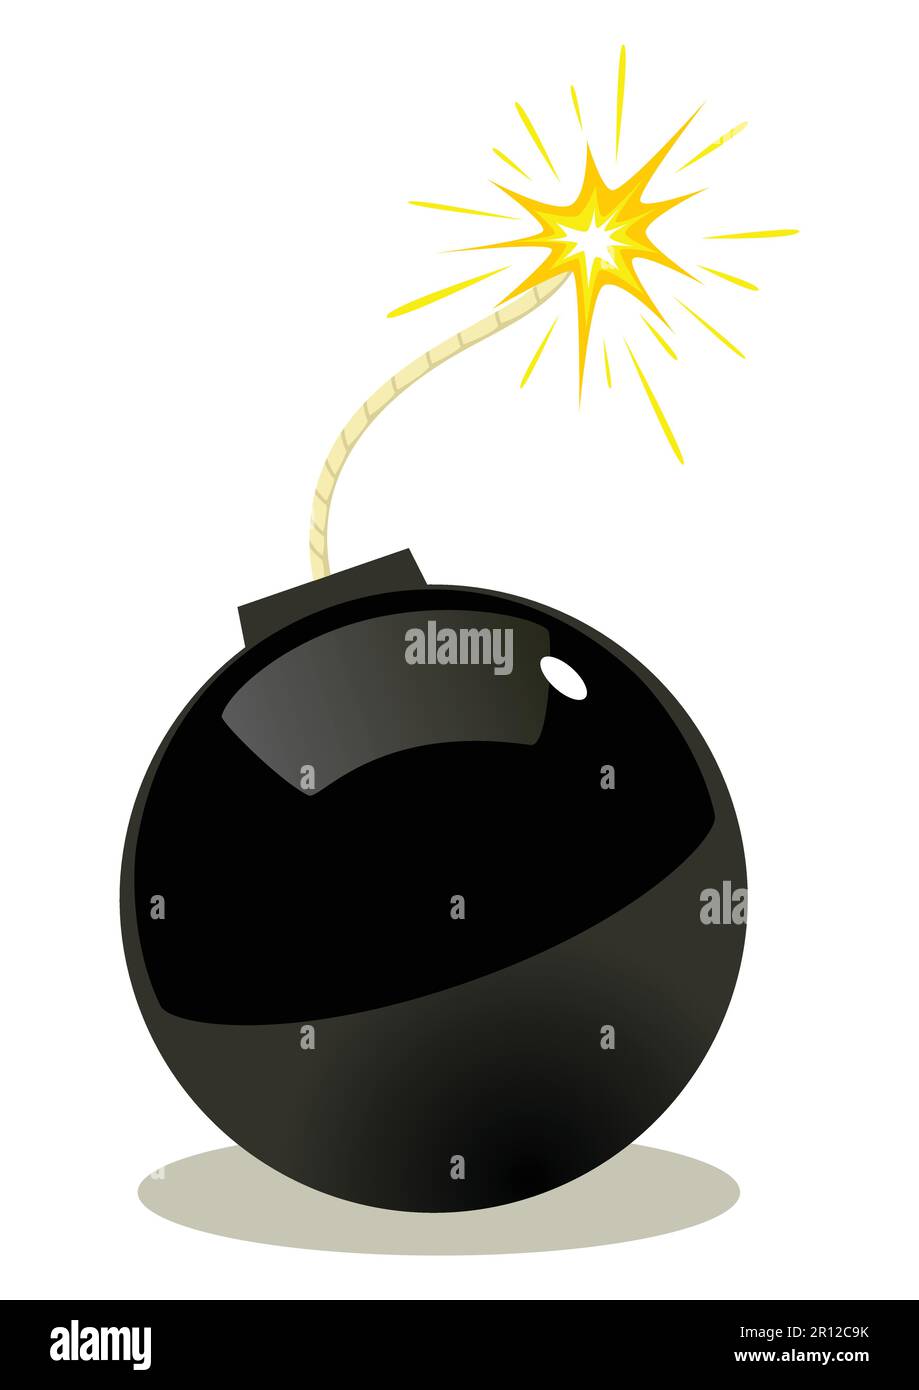 Cartoon illustration of a bomb Stock Vector